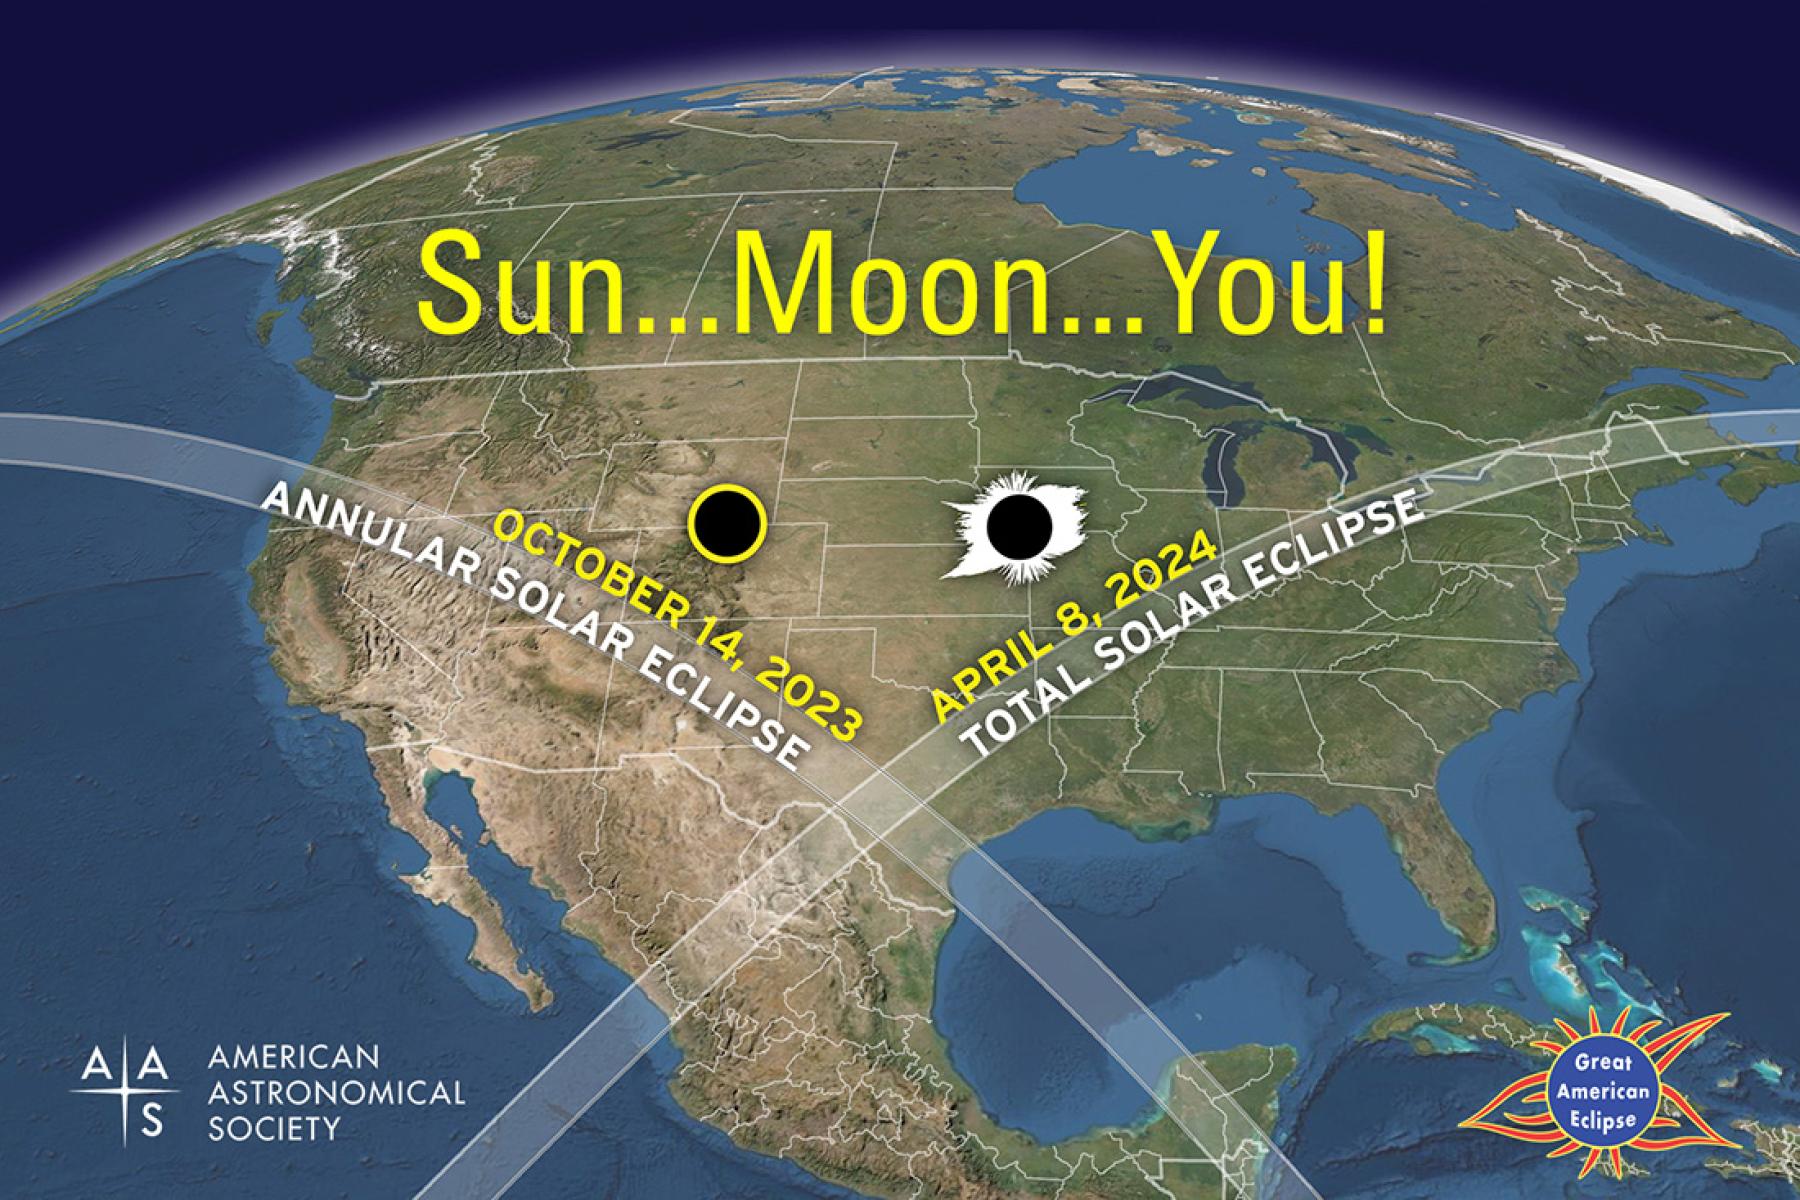 Solar Eclipse 2023 2024 Sun Moon You Map Courtesy Michael Zeiler GreatAmericanEclipse Dot Com ?h=810b210d&itok=3iJhd9cj